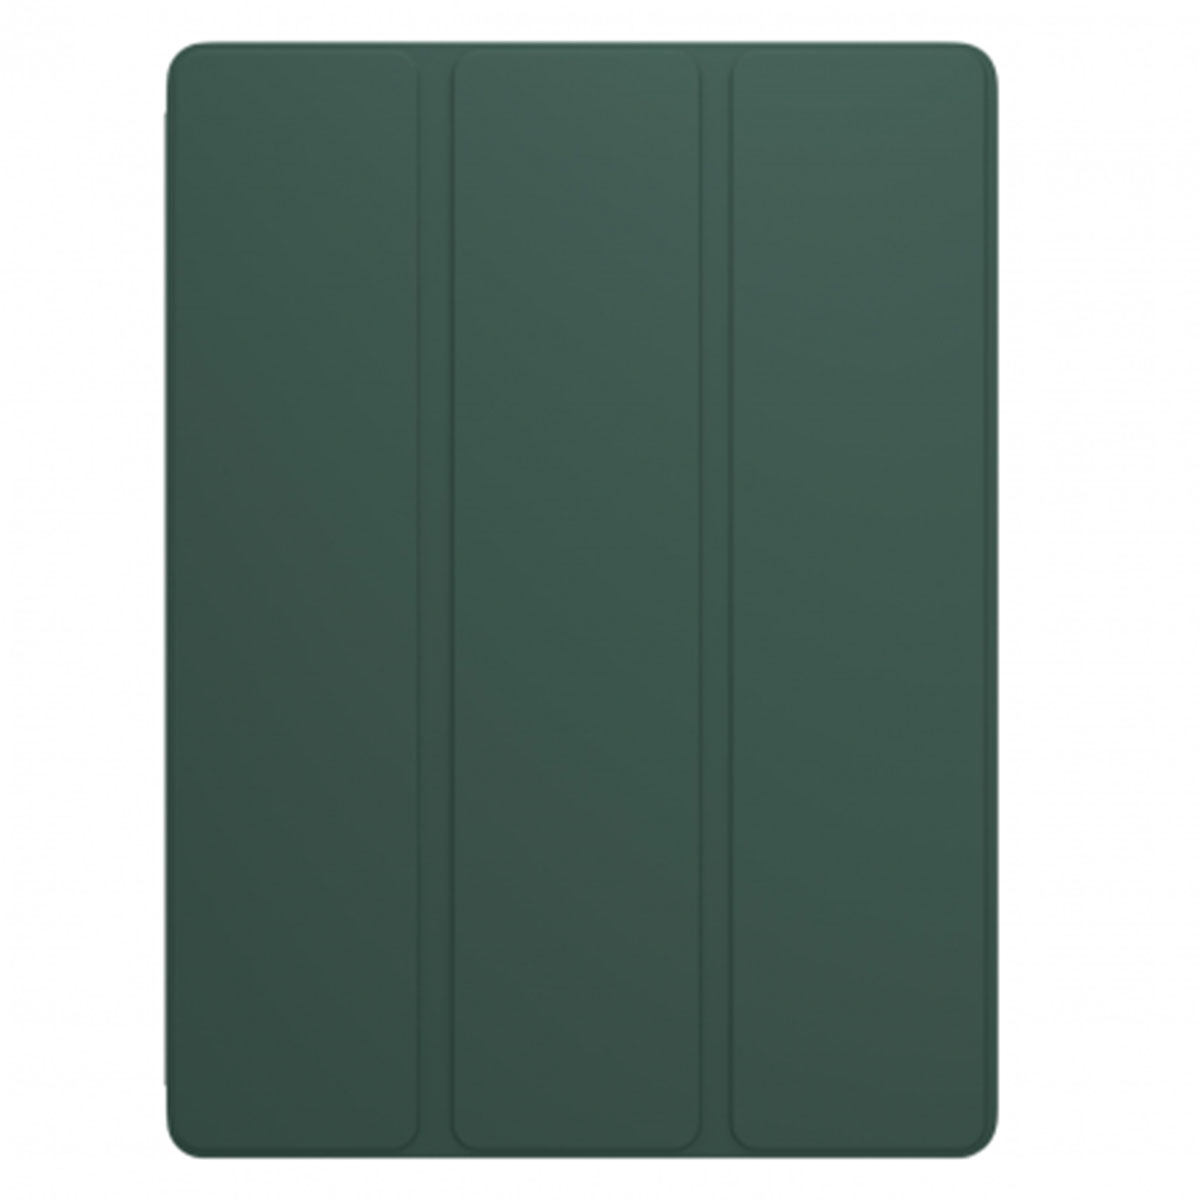 Husa de protectie tableta Next One pentru Apple iPad 10.2 inch, Suport Pen, Protectie 360, Plastic si microfiba interior, Leaf Green